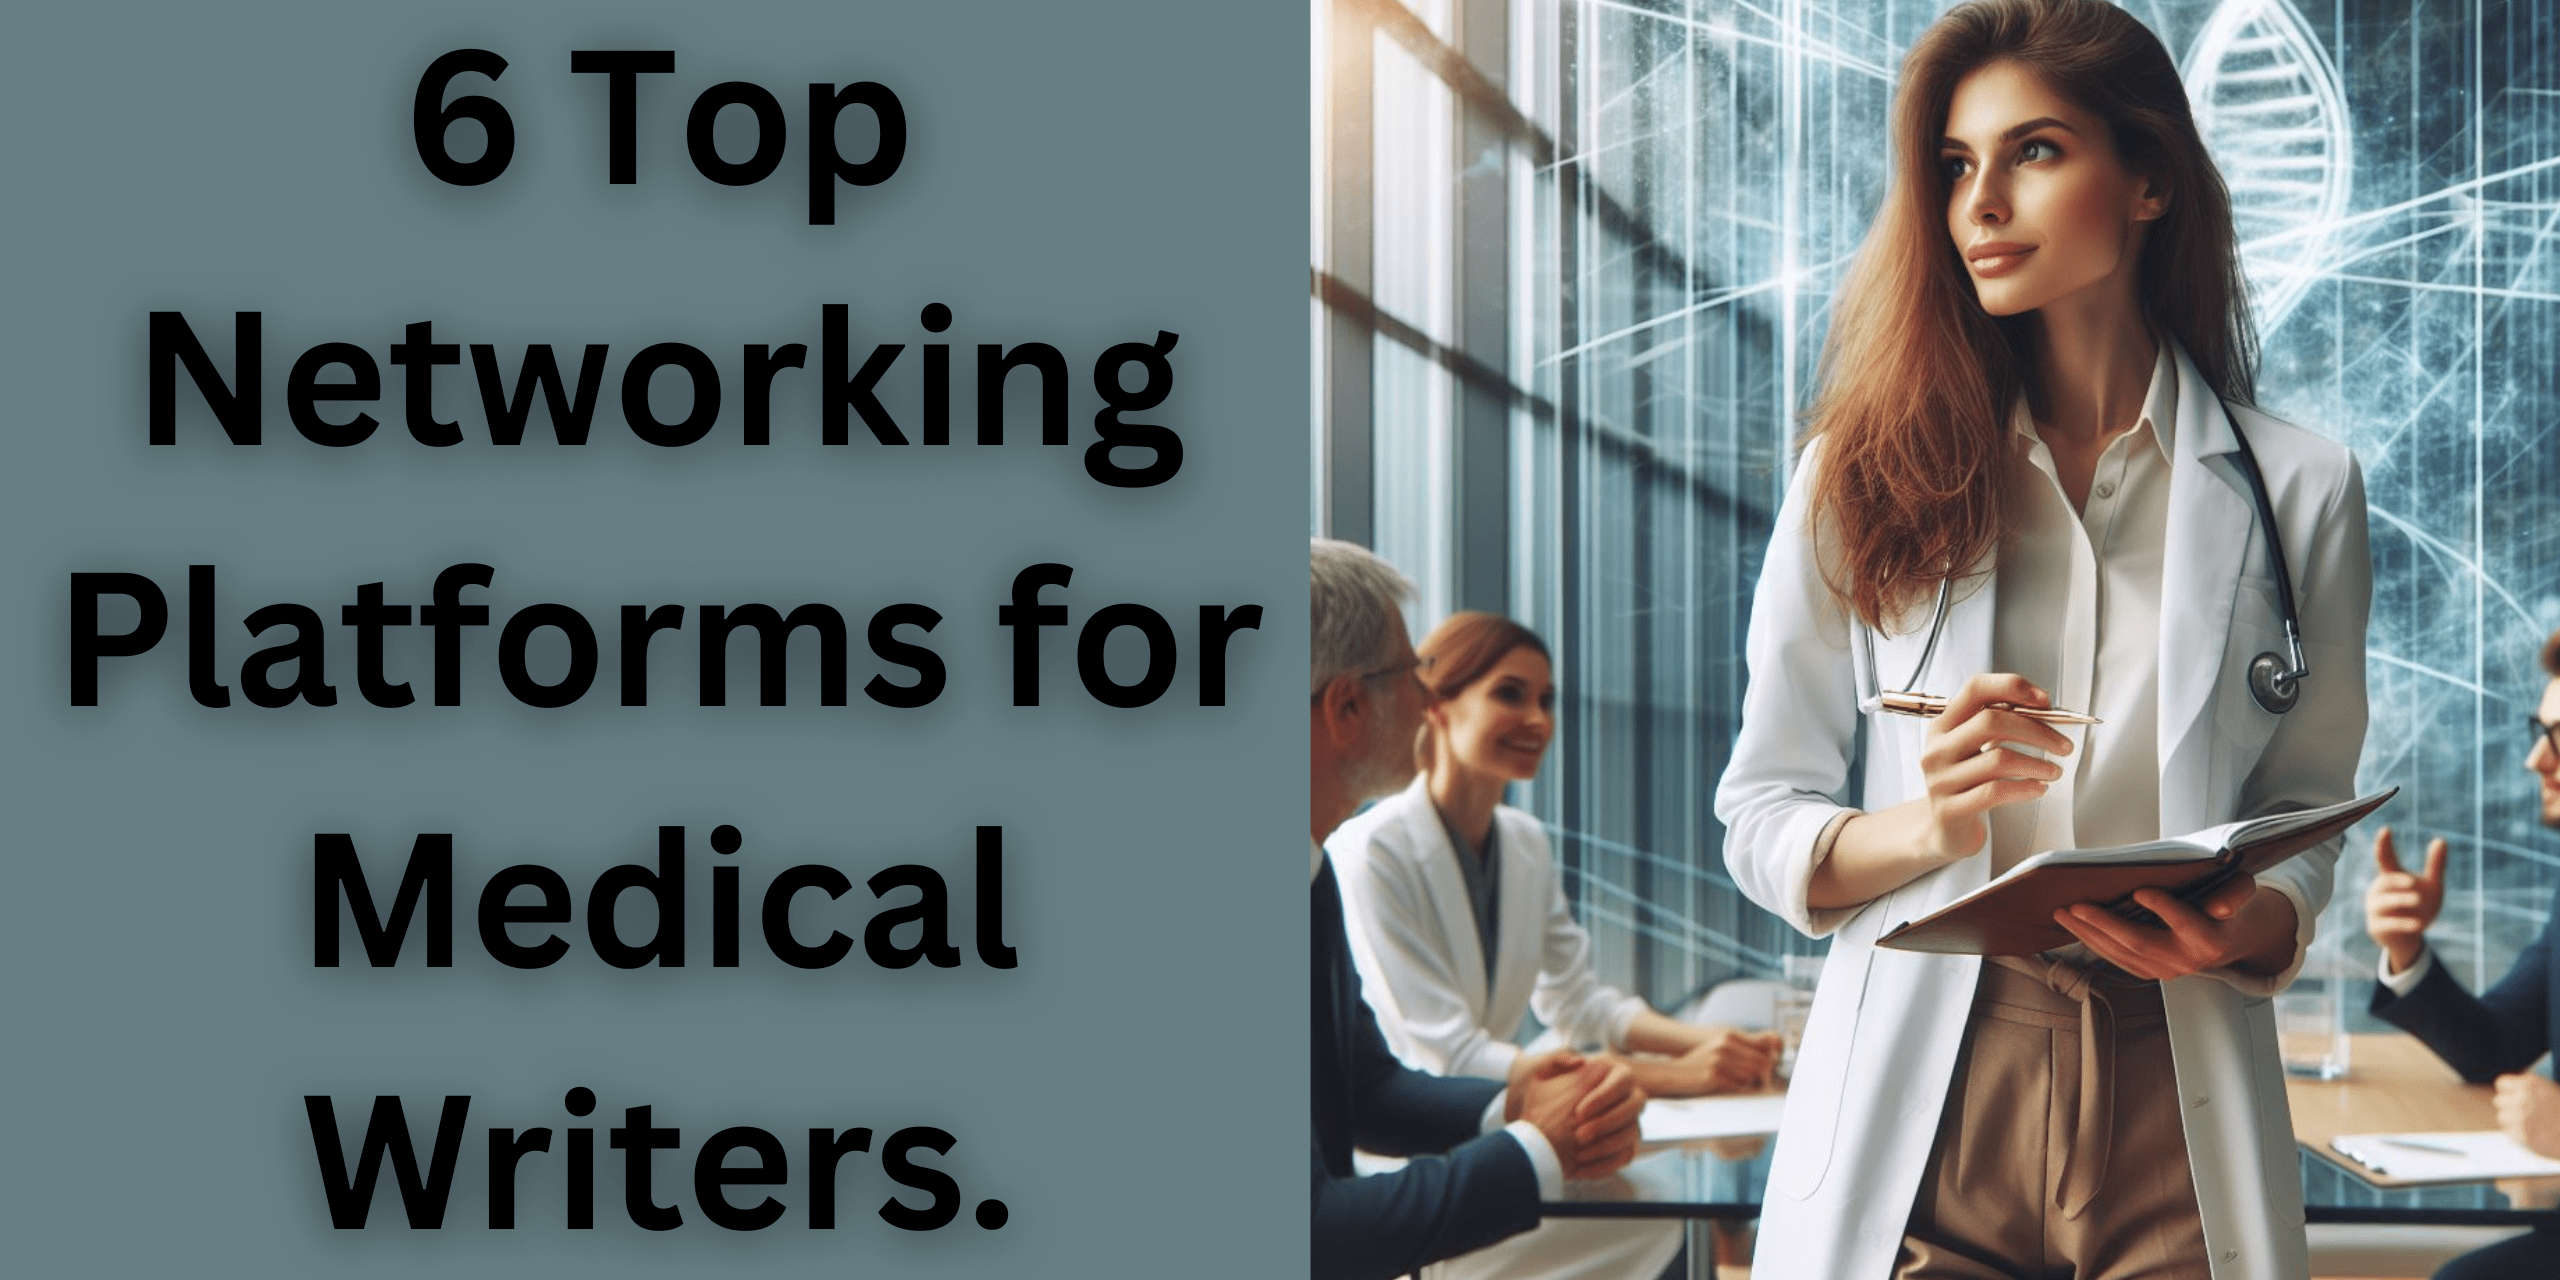 alt="6 Top Networking Platforms for Medical Writers"